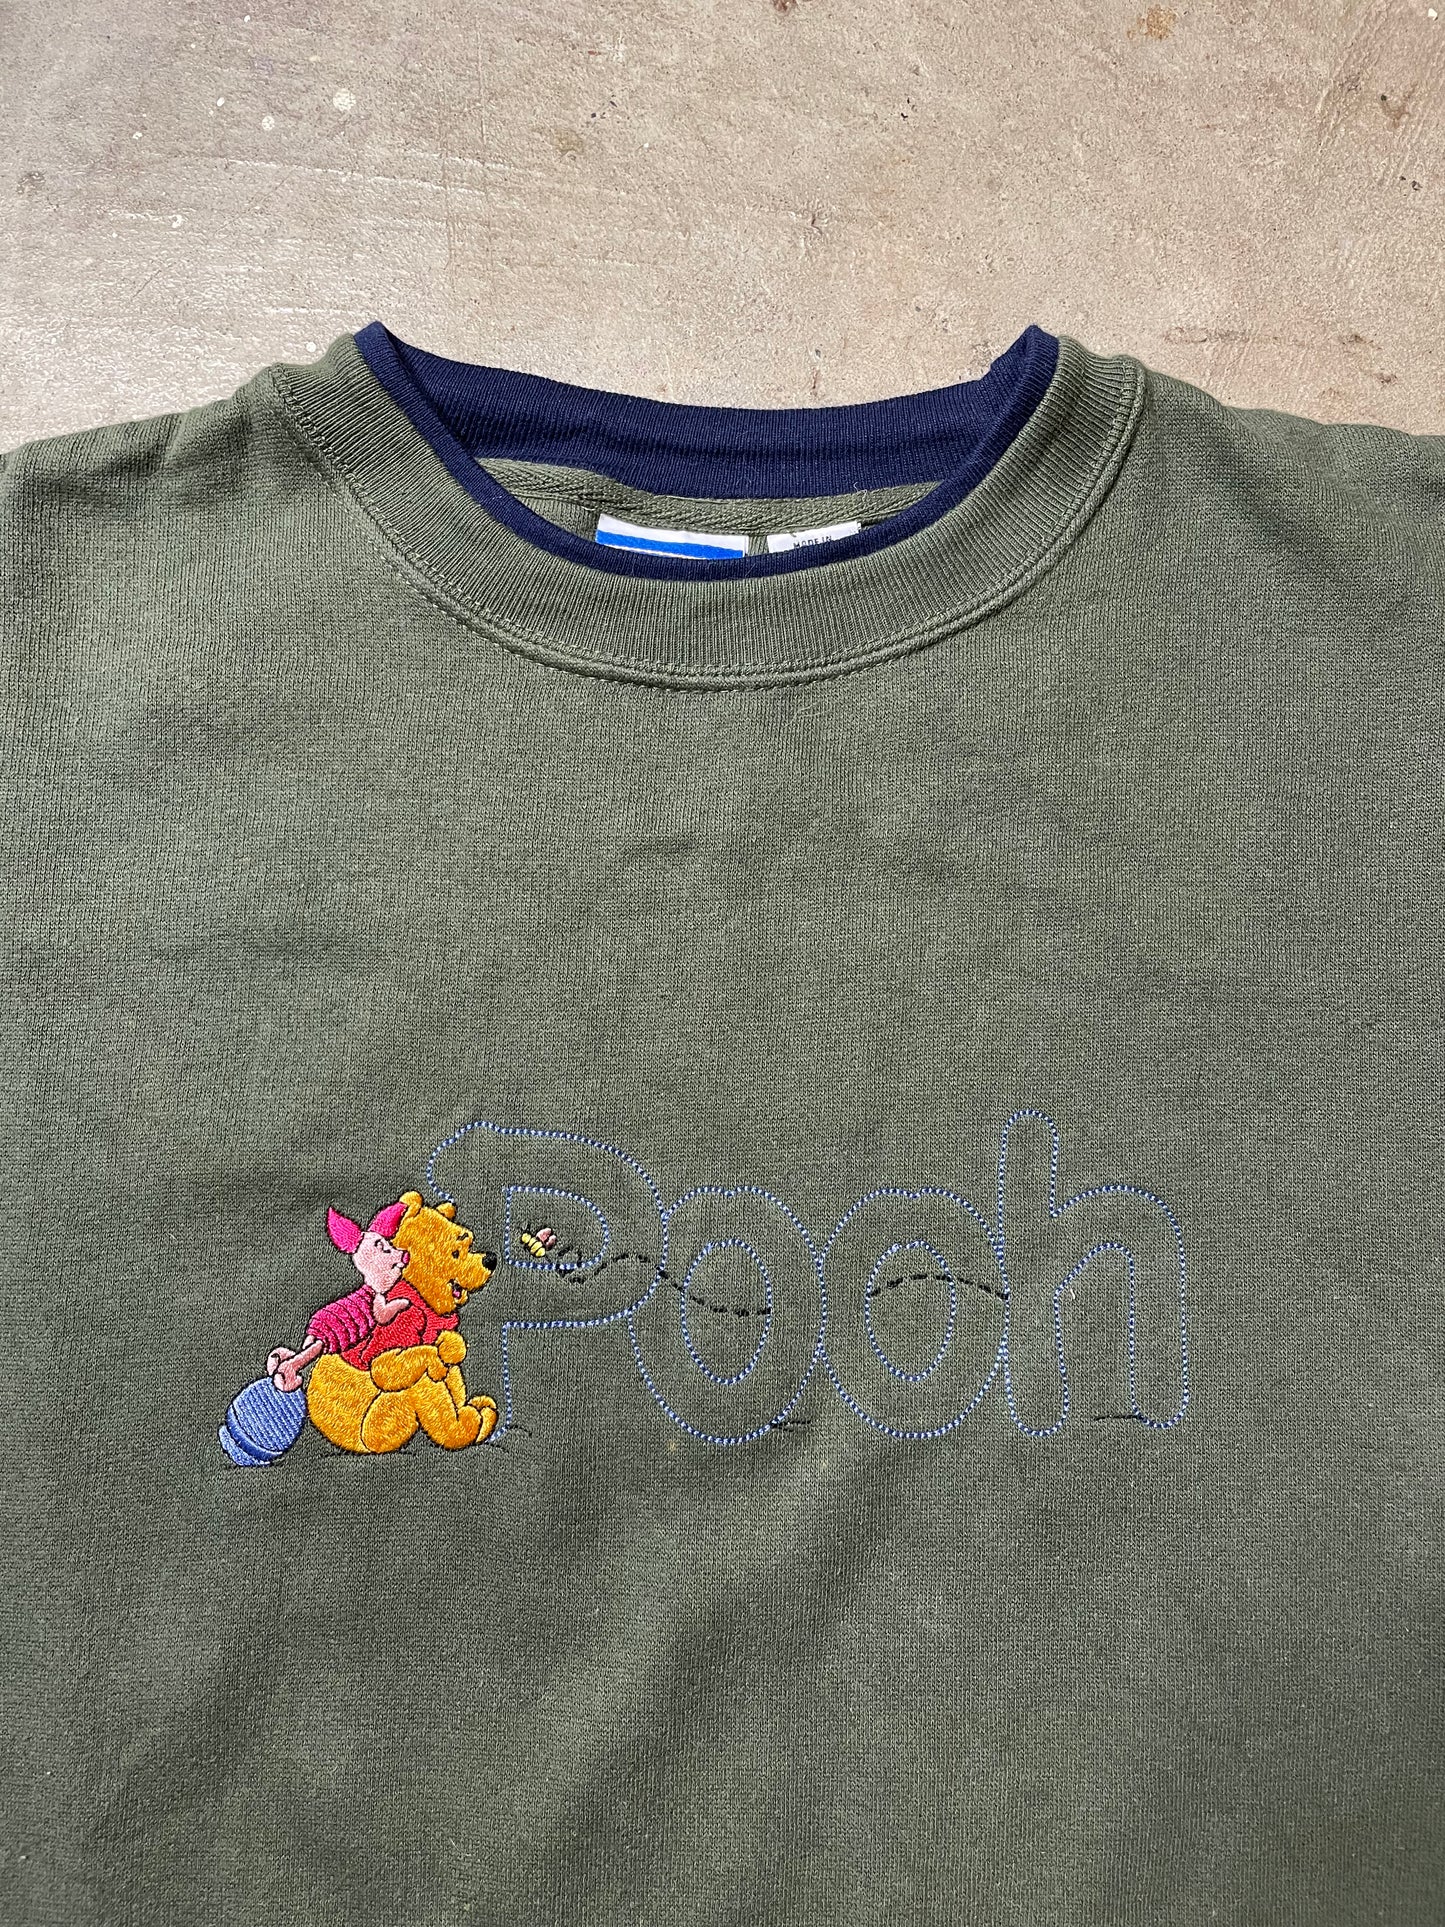 1990s Winnie the Pooh Crewneck